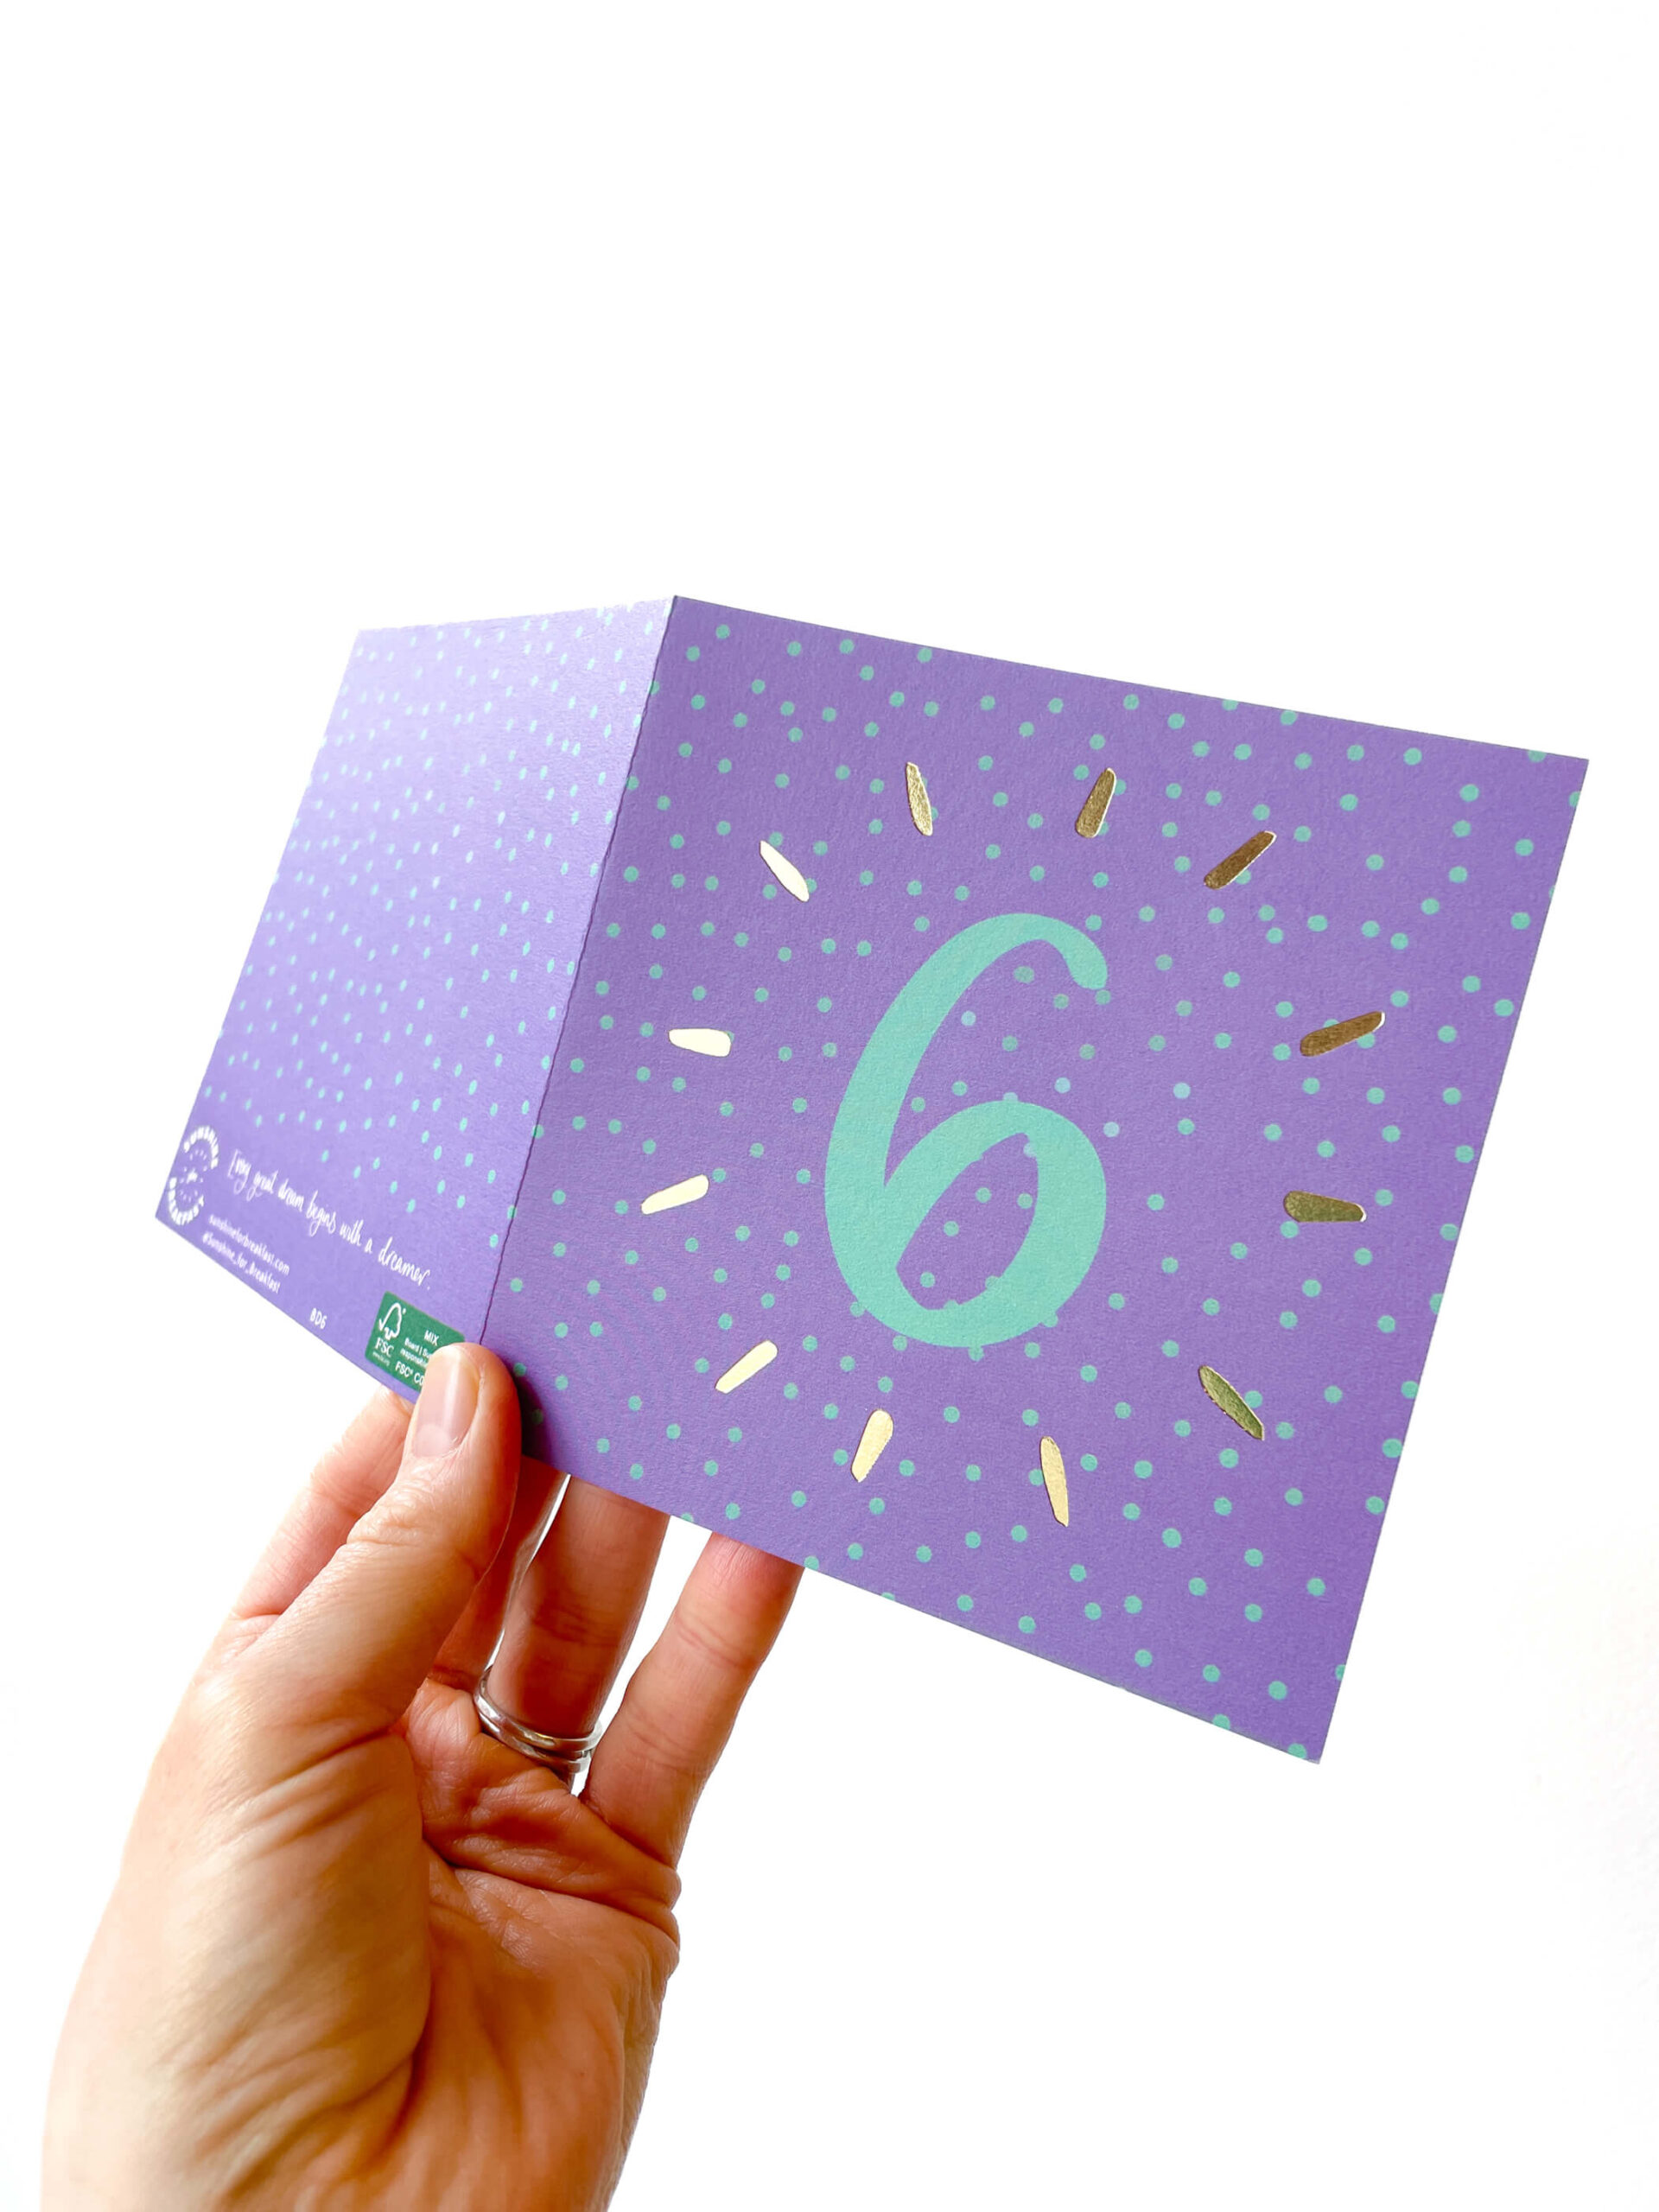 6th birthday card in purple and orange spotty design